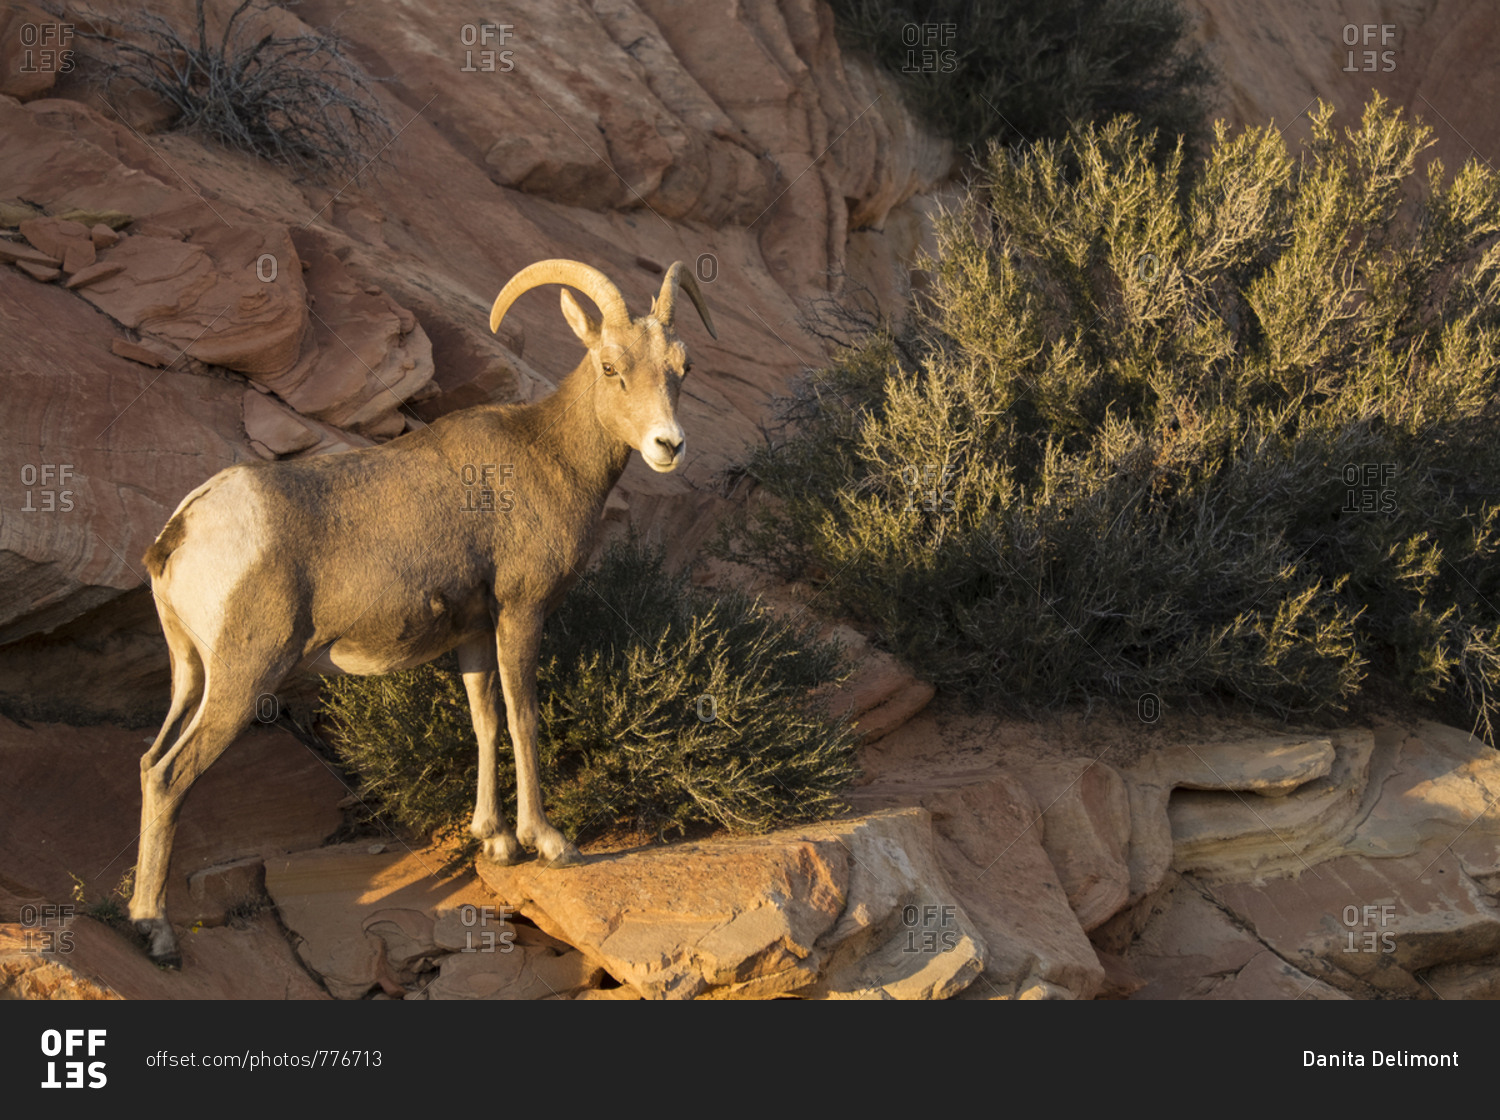 Utah. A female desert bighorn sheep stands on red rocks in late